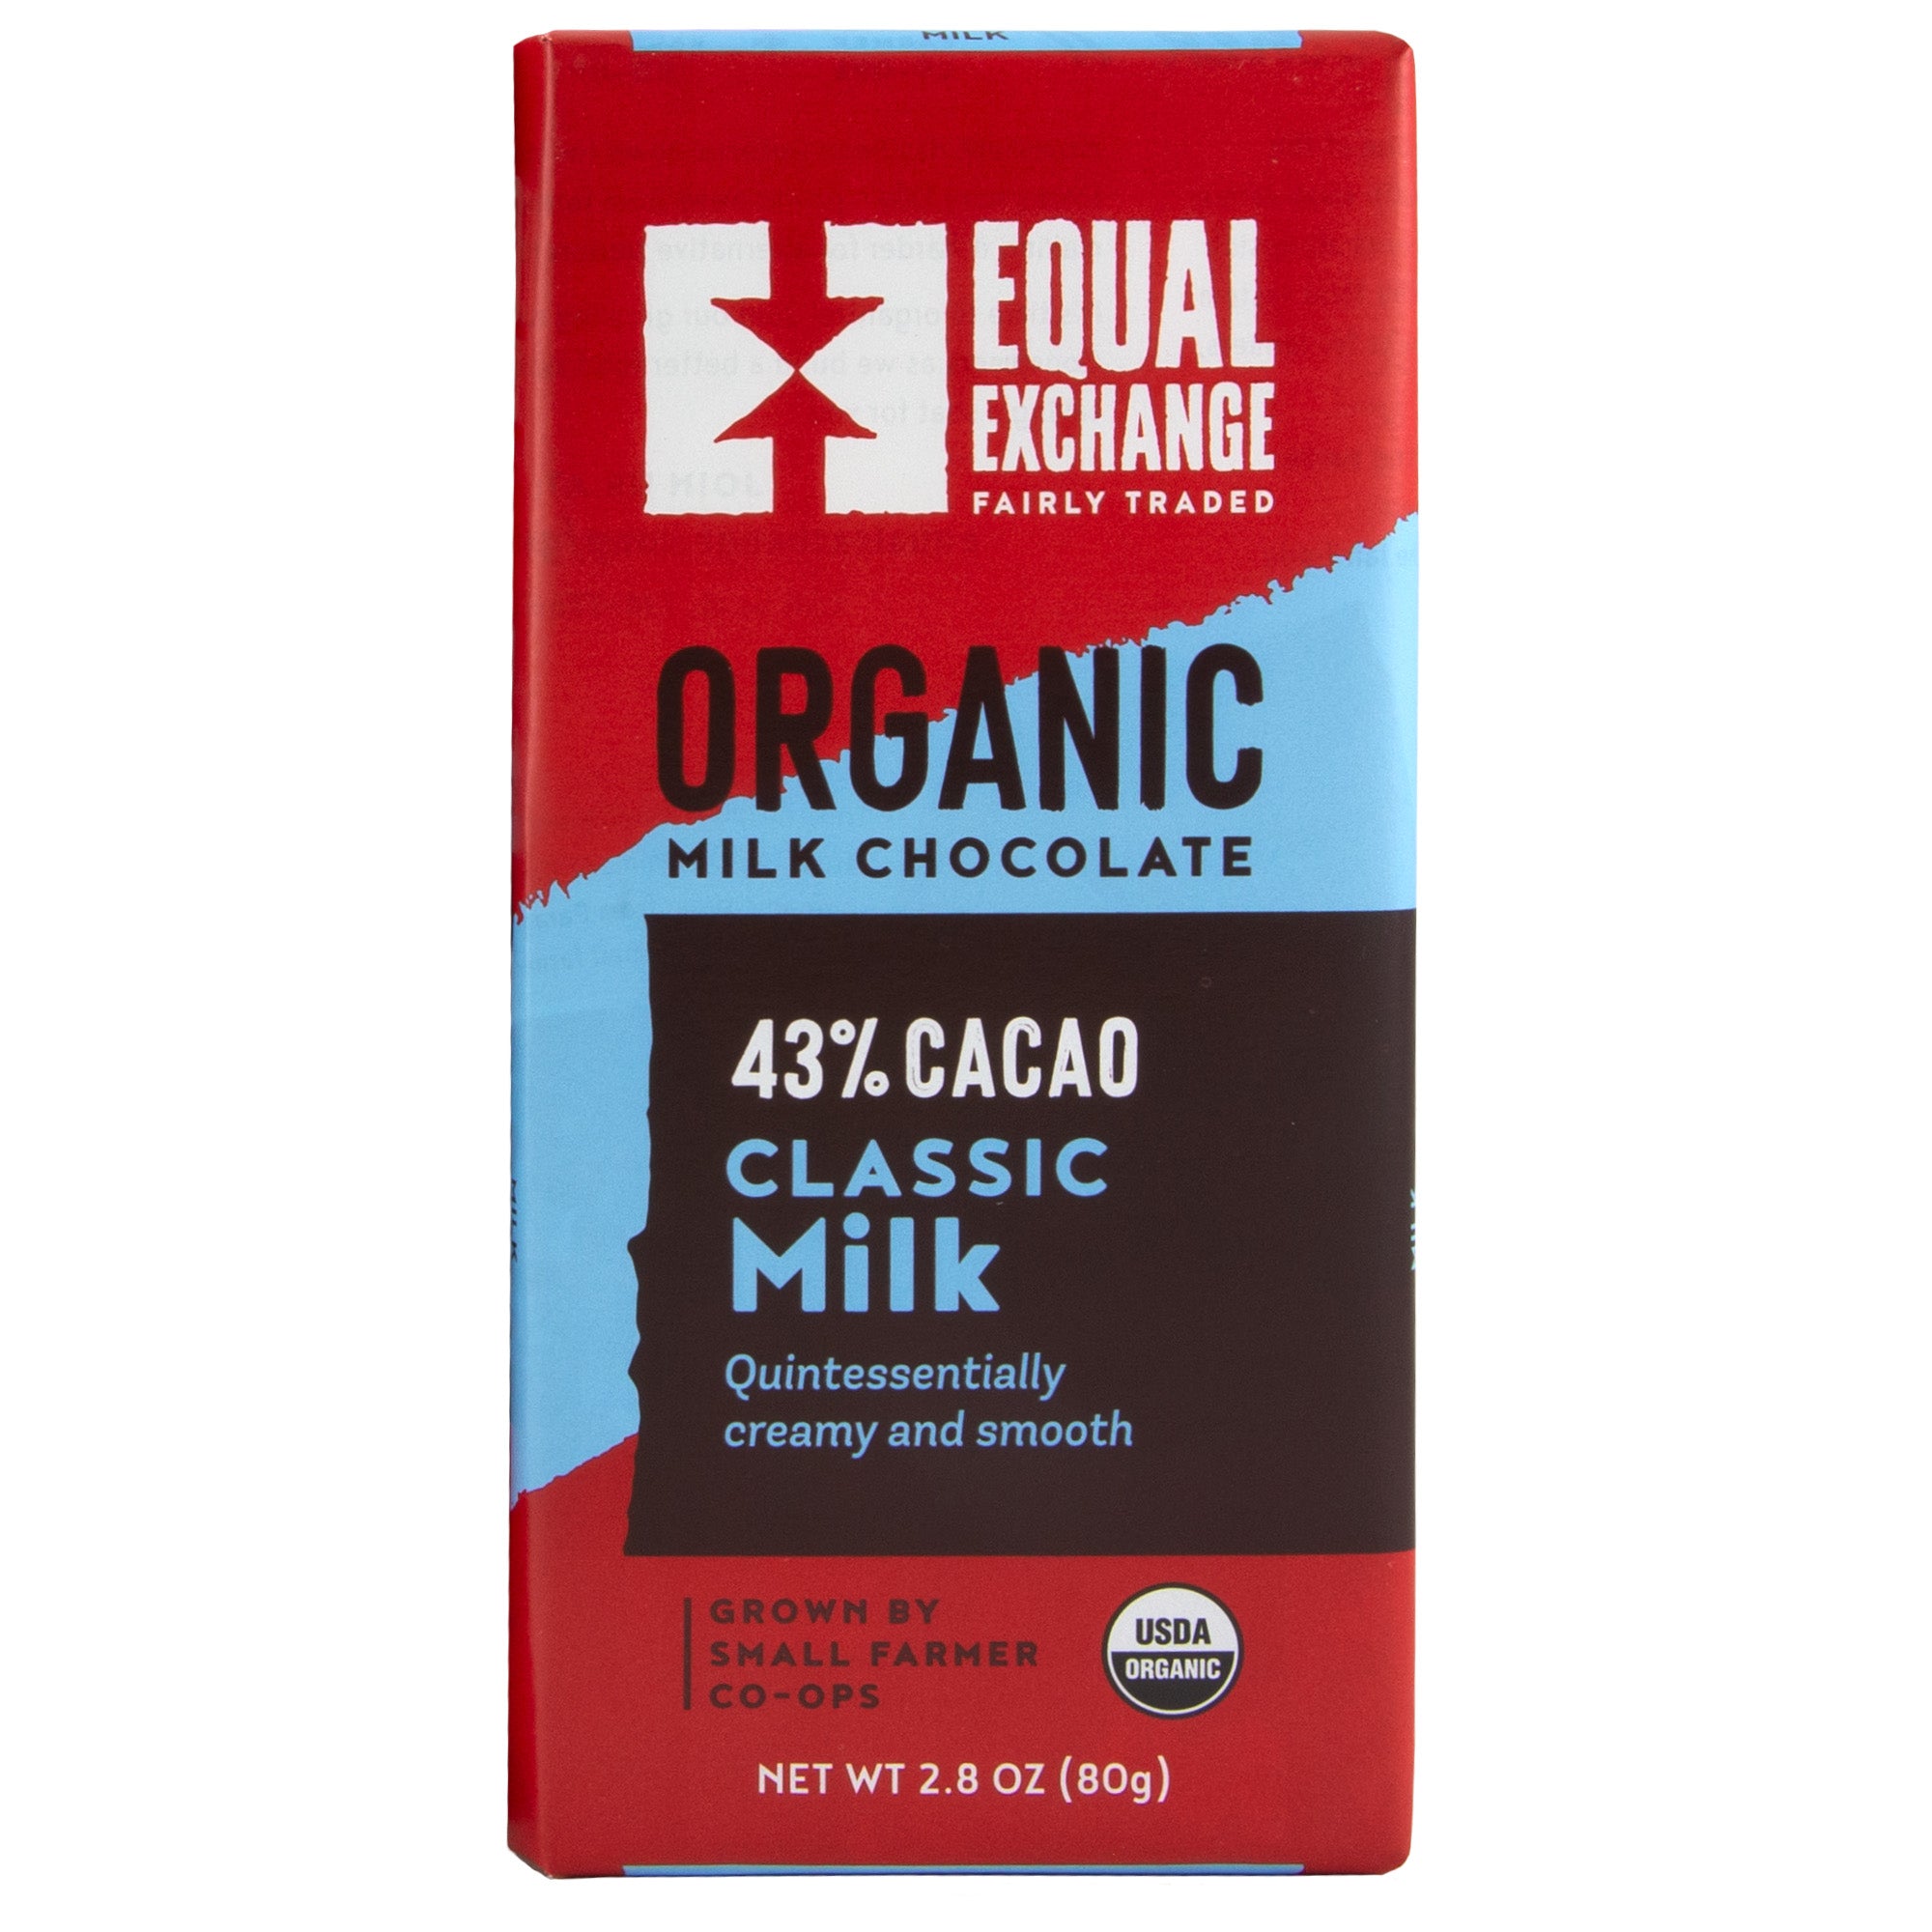 Organic Milk Chocolate - Equal Exchange - 2.8 oz